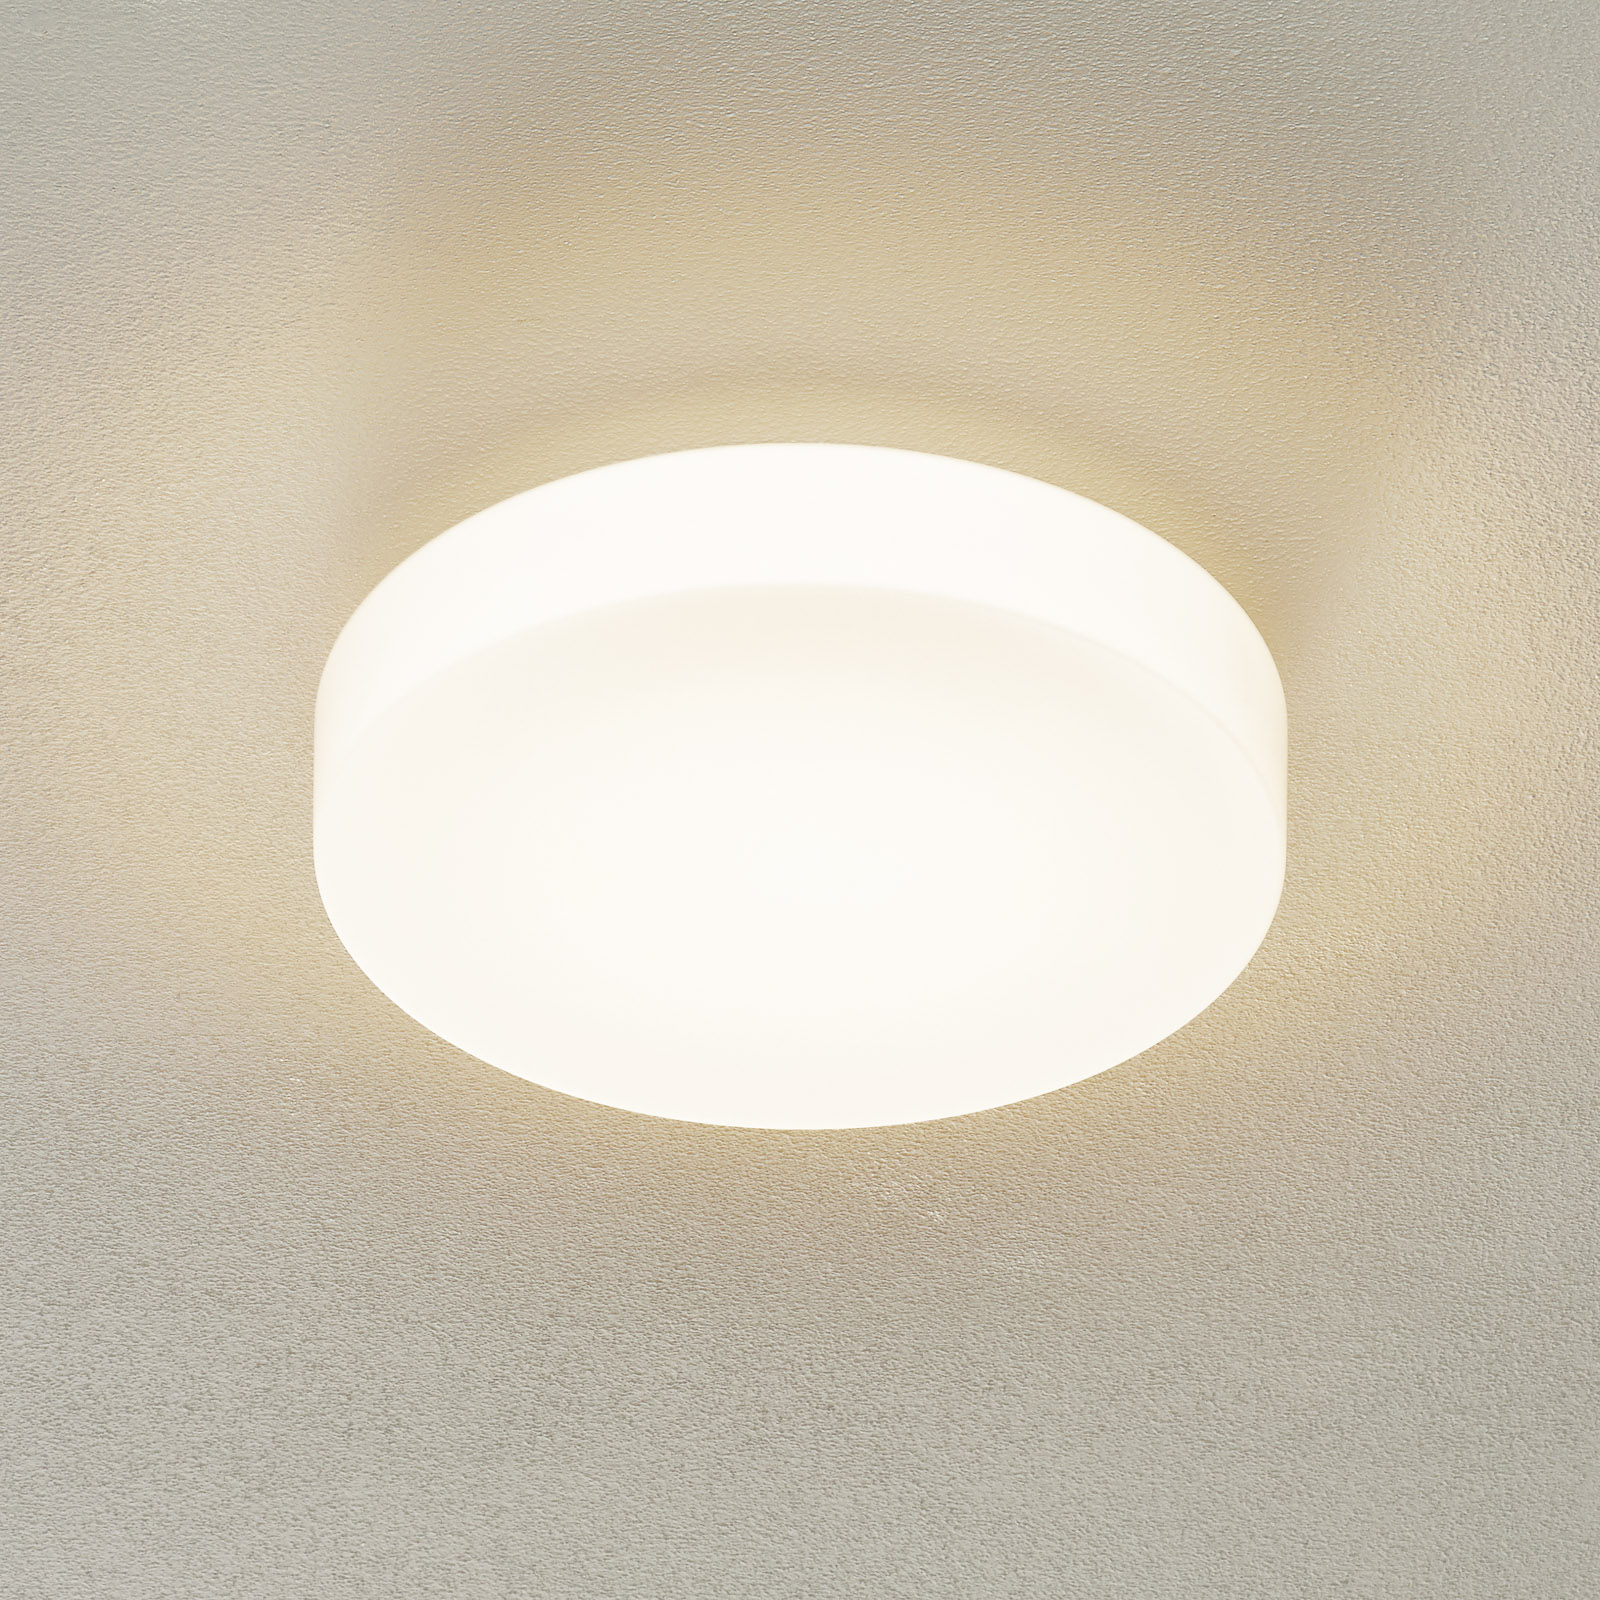 BEGA 34287 LED plafondlamp wit DALI Ø 34 cm